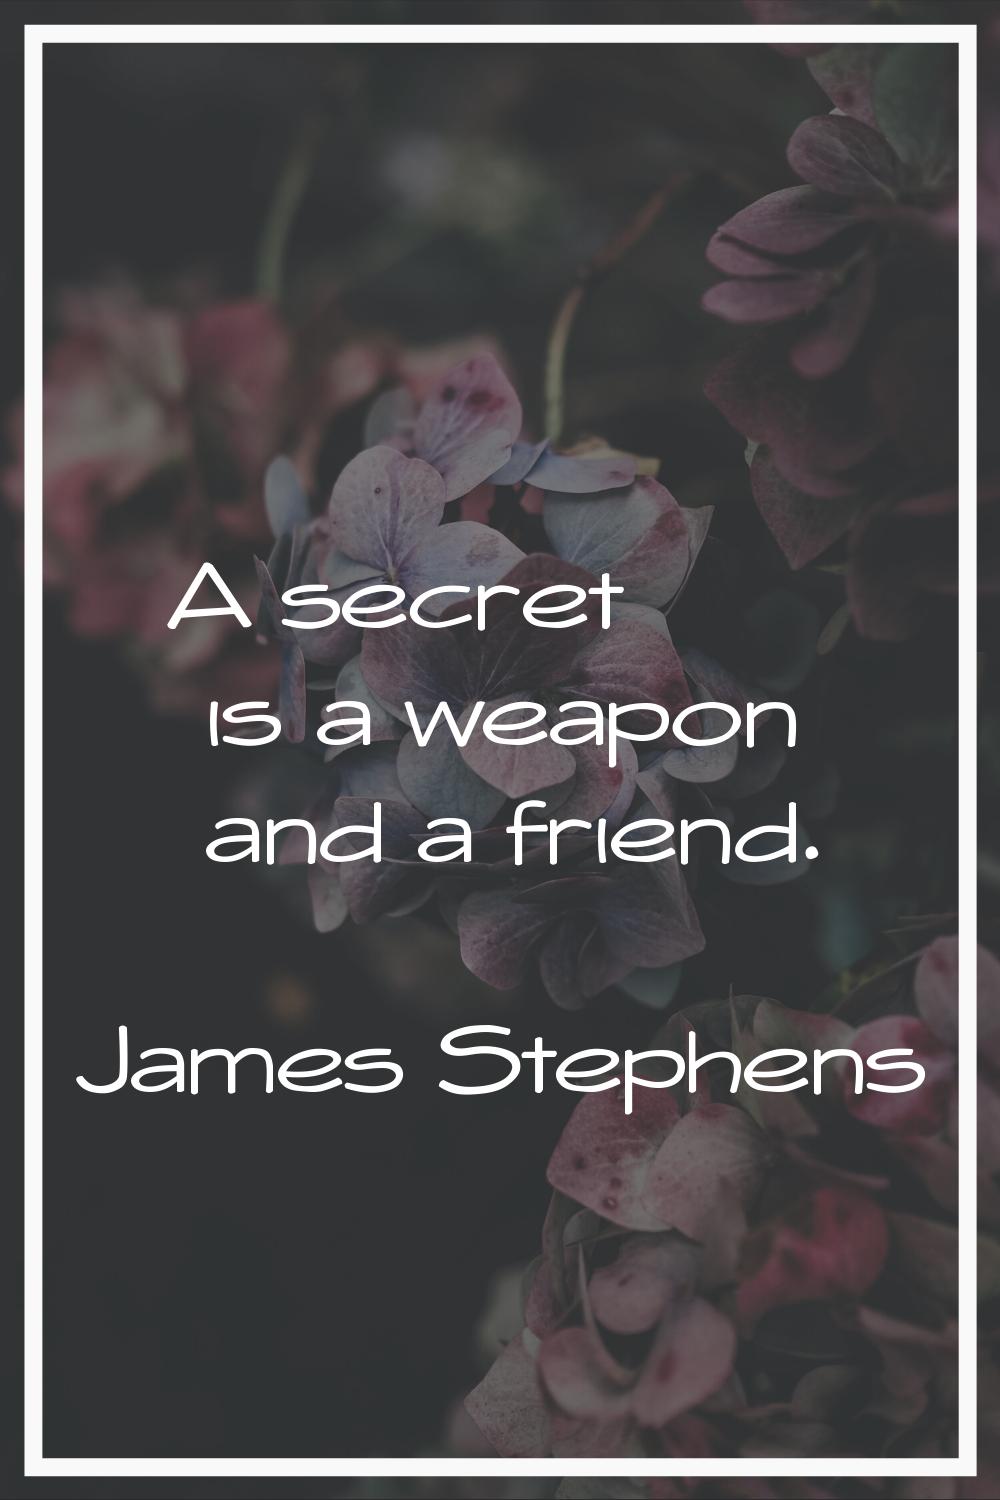 A secret is a weapon and a friend.